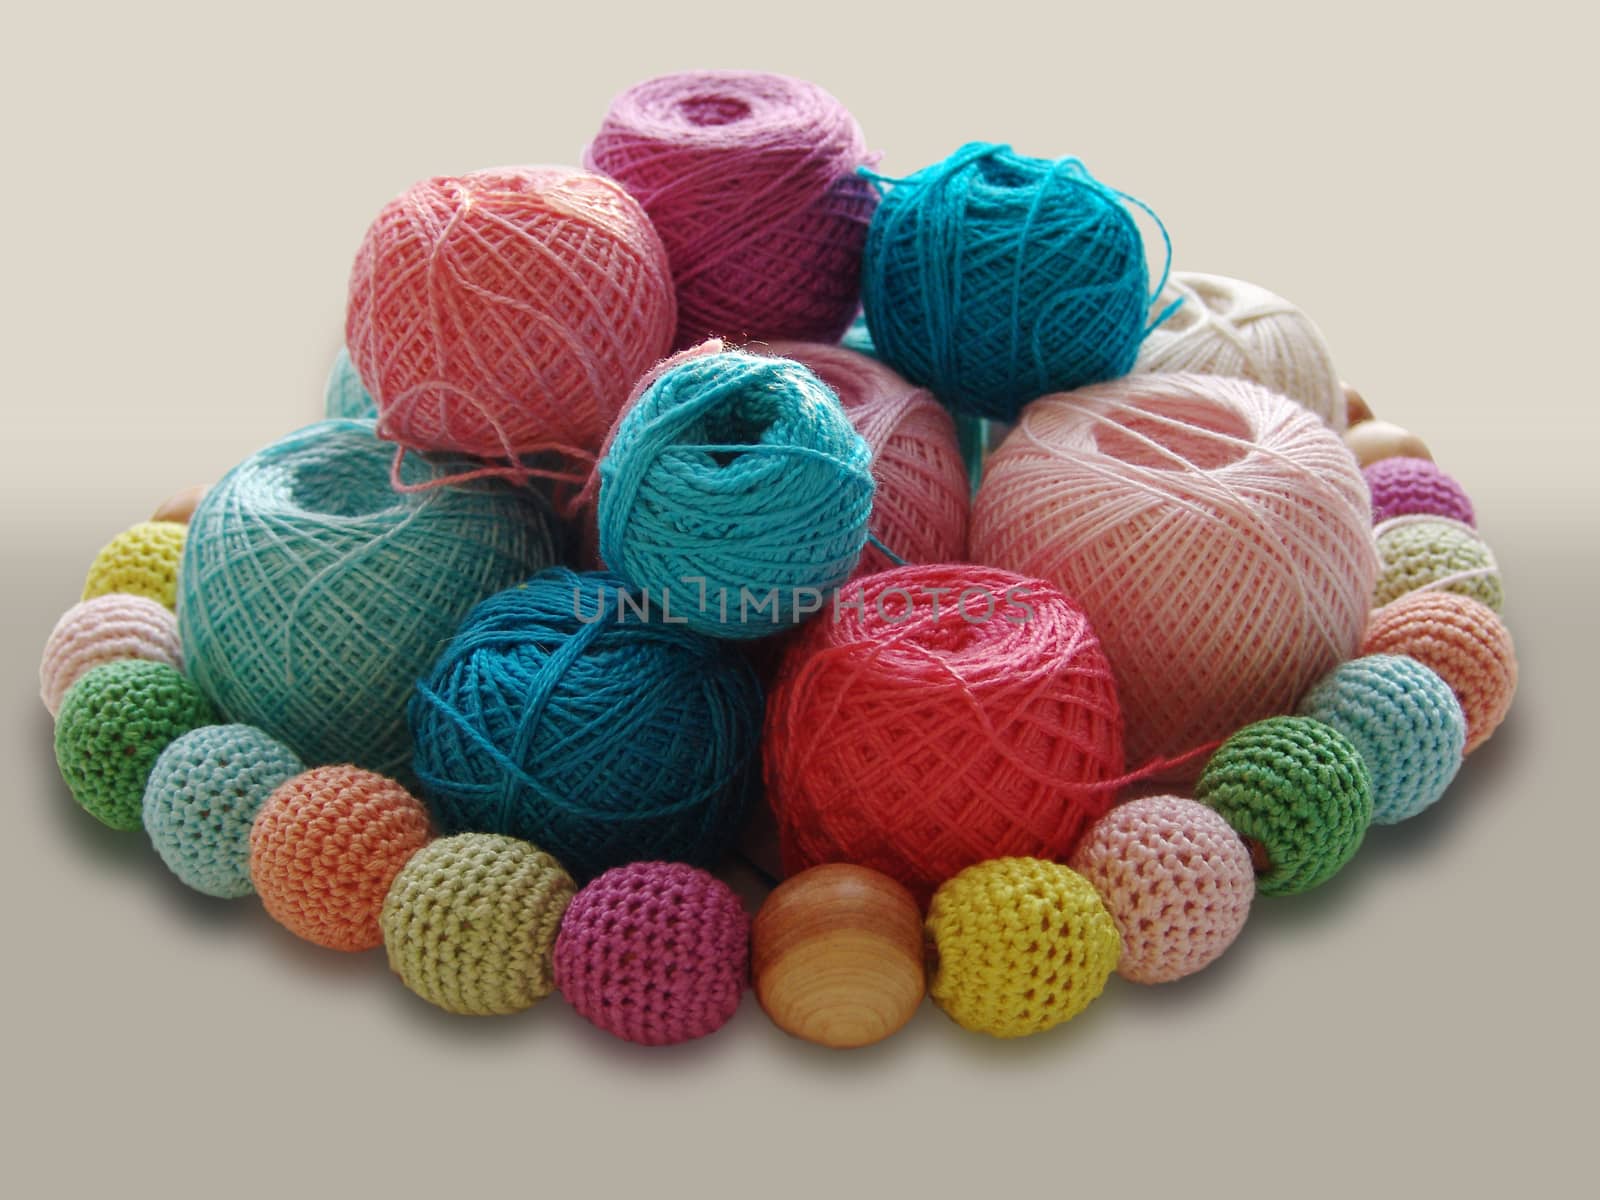 ingering yarn, various shades of pastel  colors